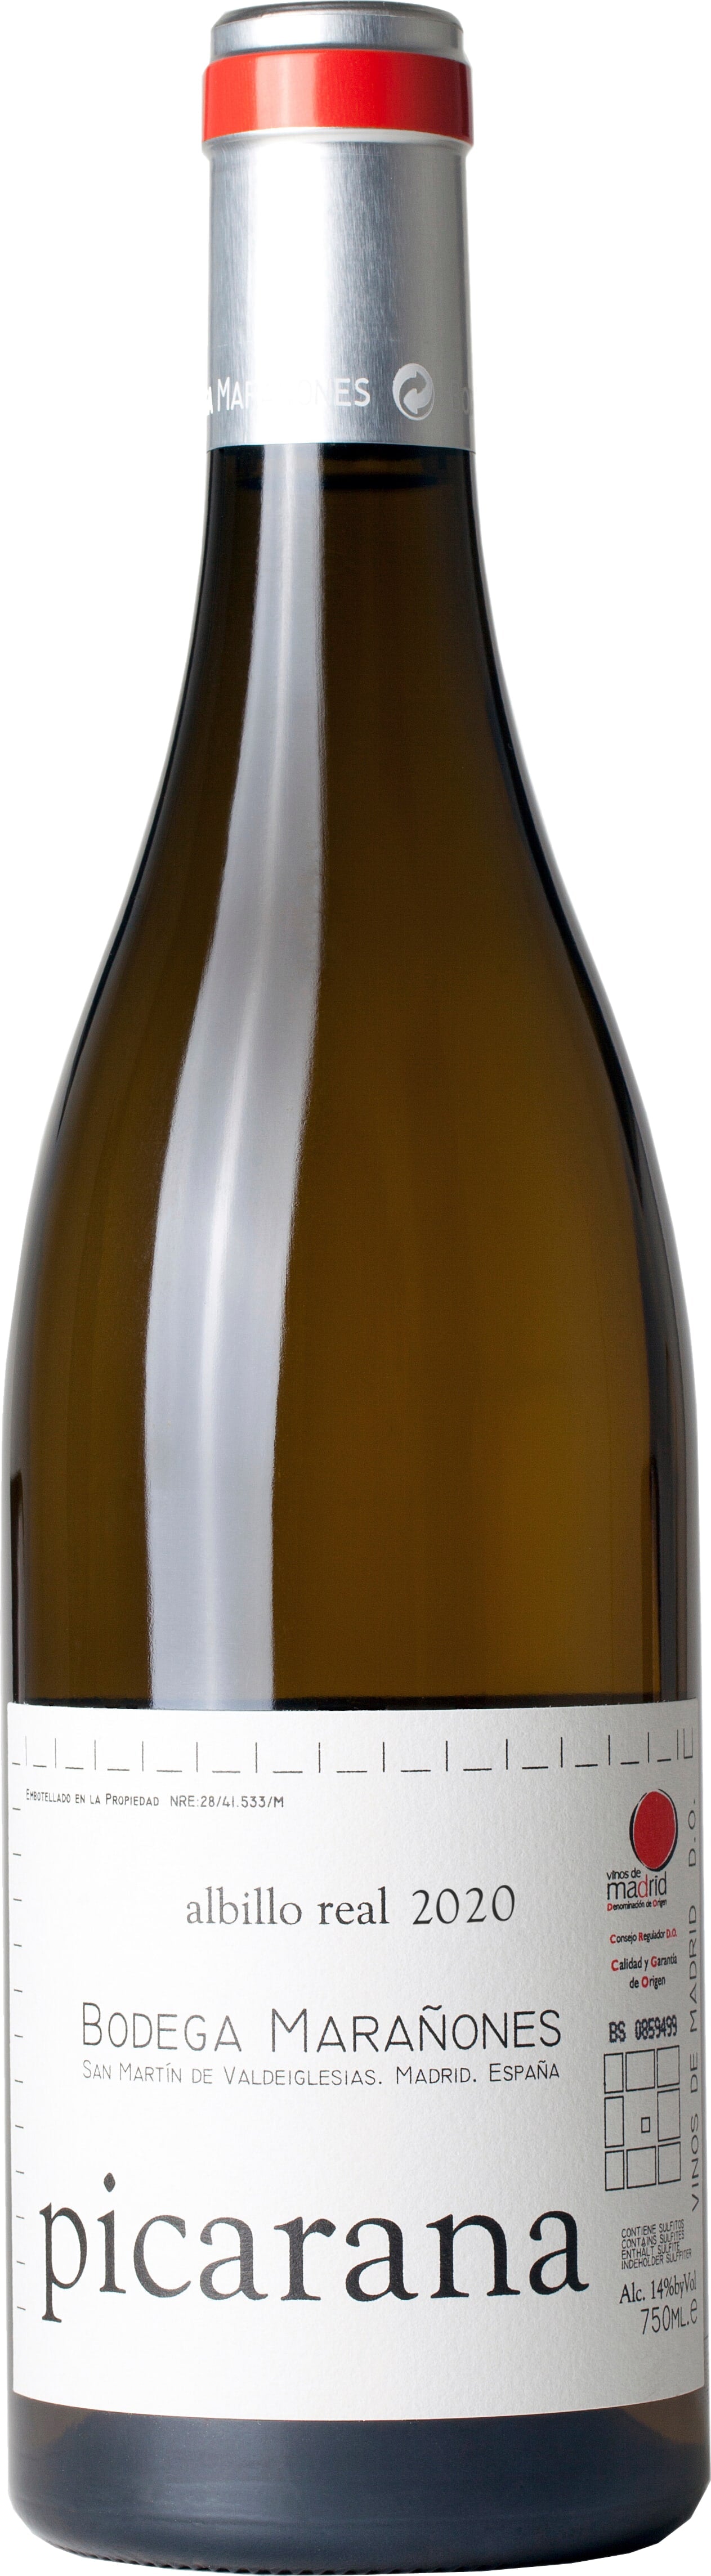 Bodega Maranones Picarana 2020 75cl - Buy Bodega Maranones Wines from GREAT WINES DIRECT wine shop